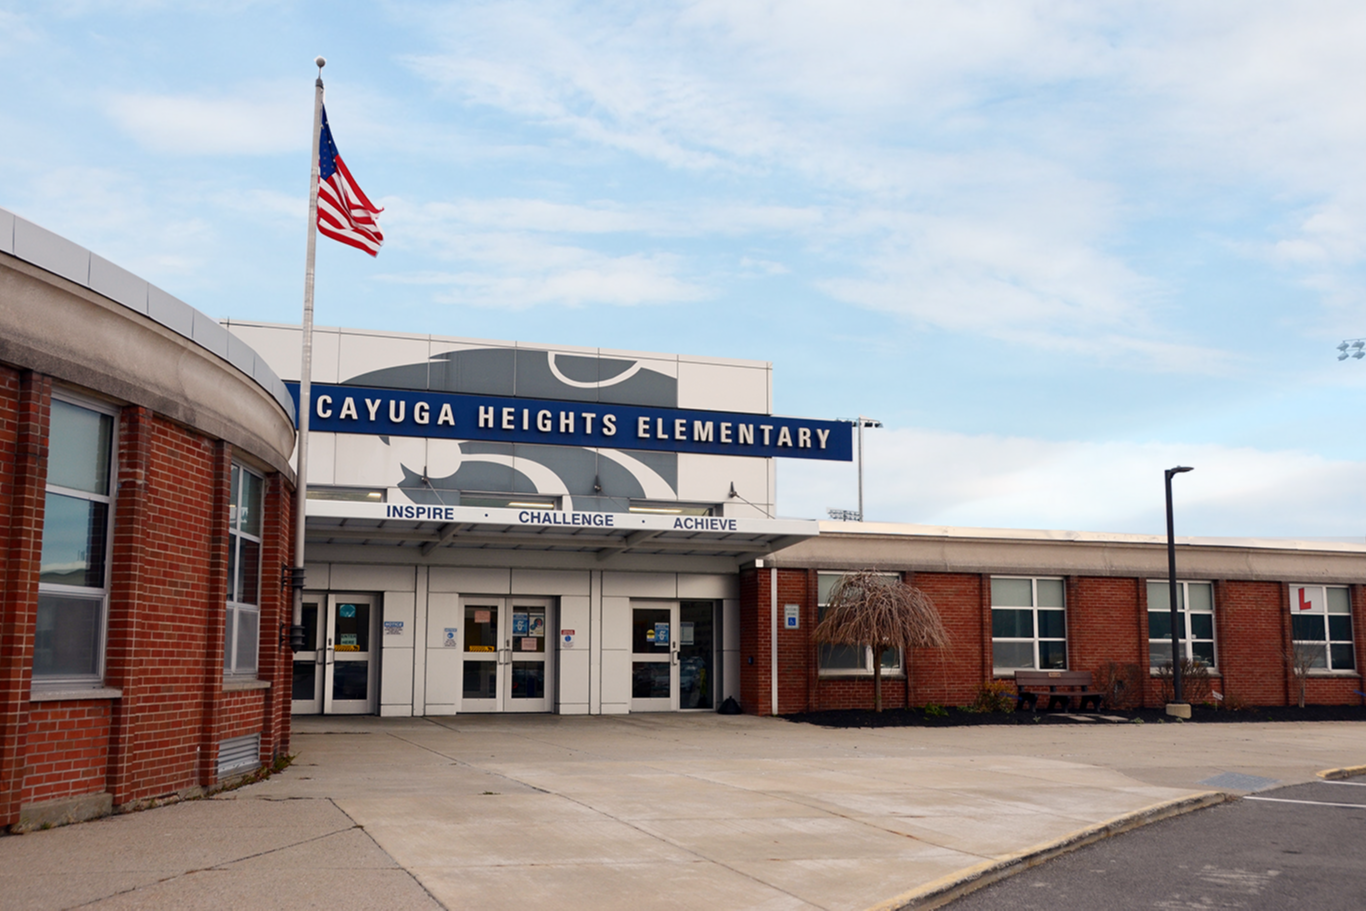 Cayuga Heights Elementary